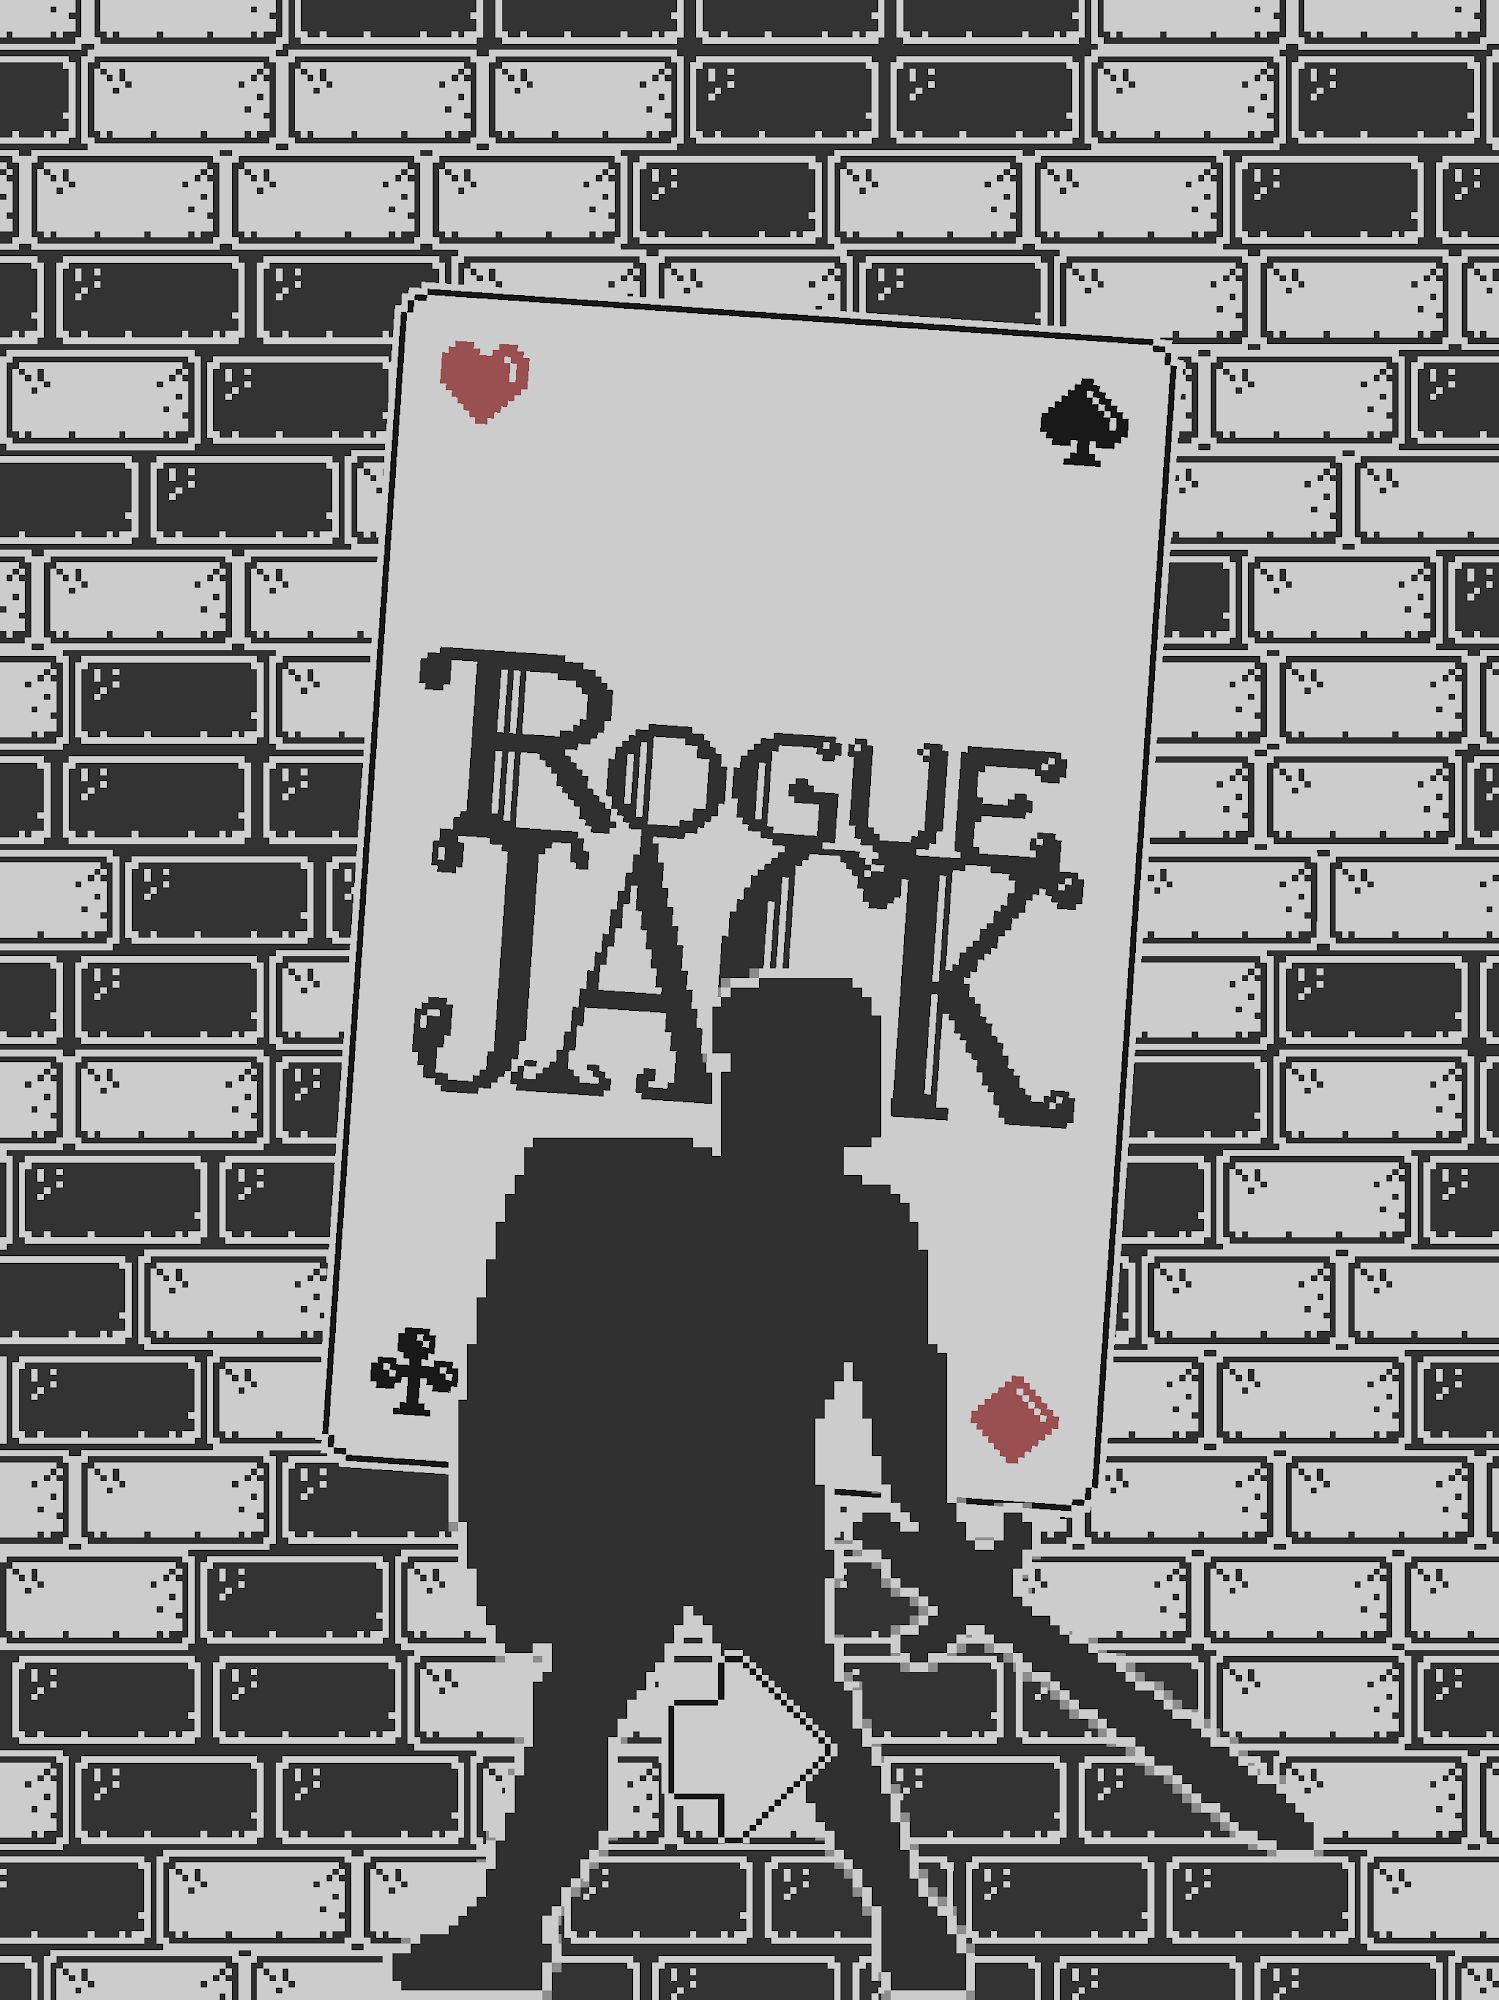 Scarica RogueJack: Roguelike BlackJack gratis per Android.